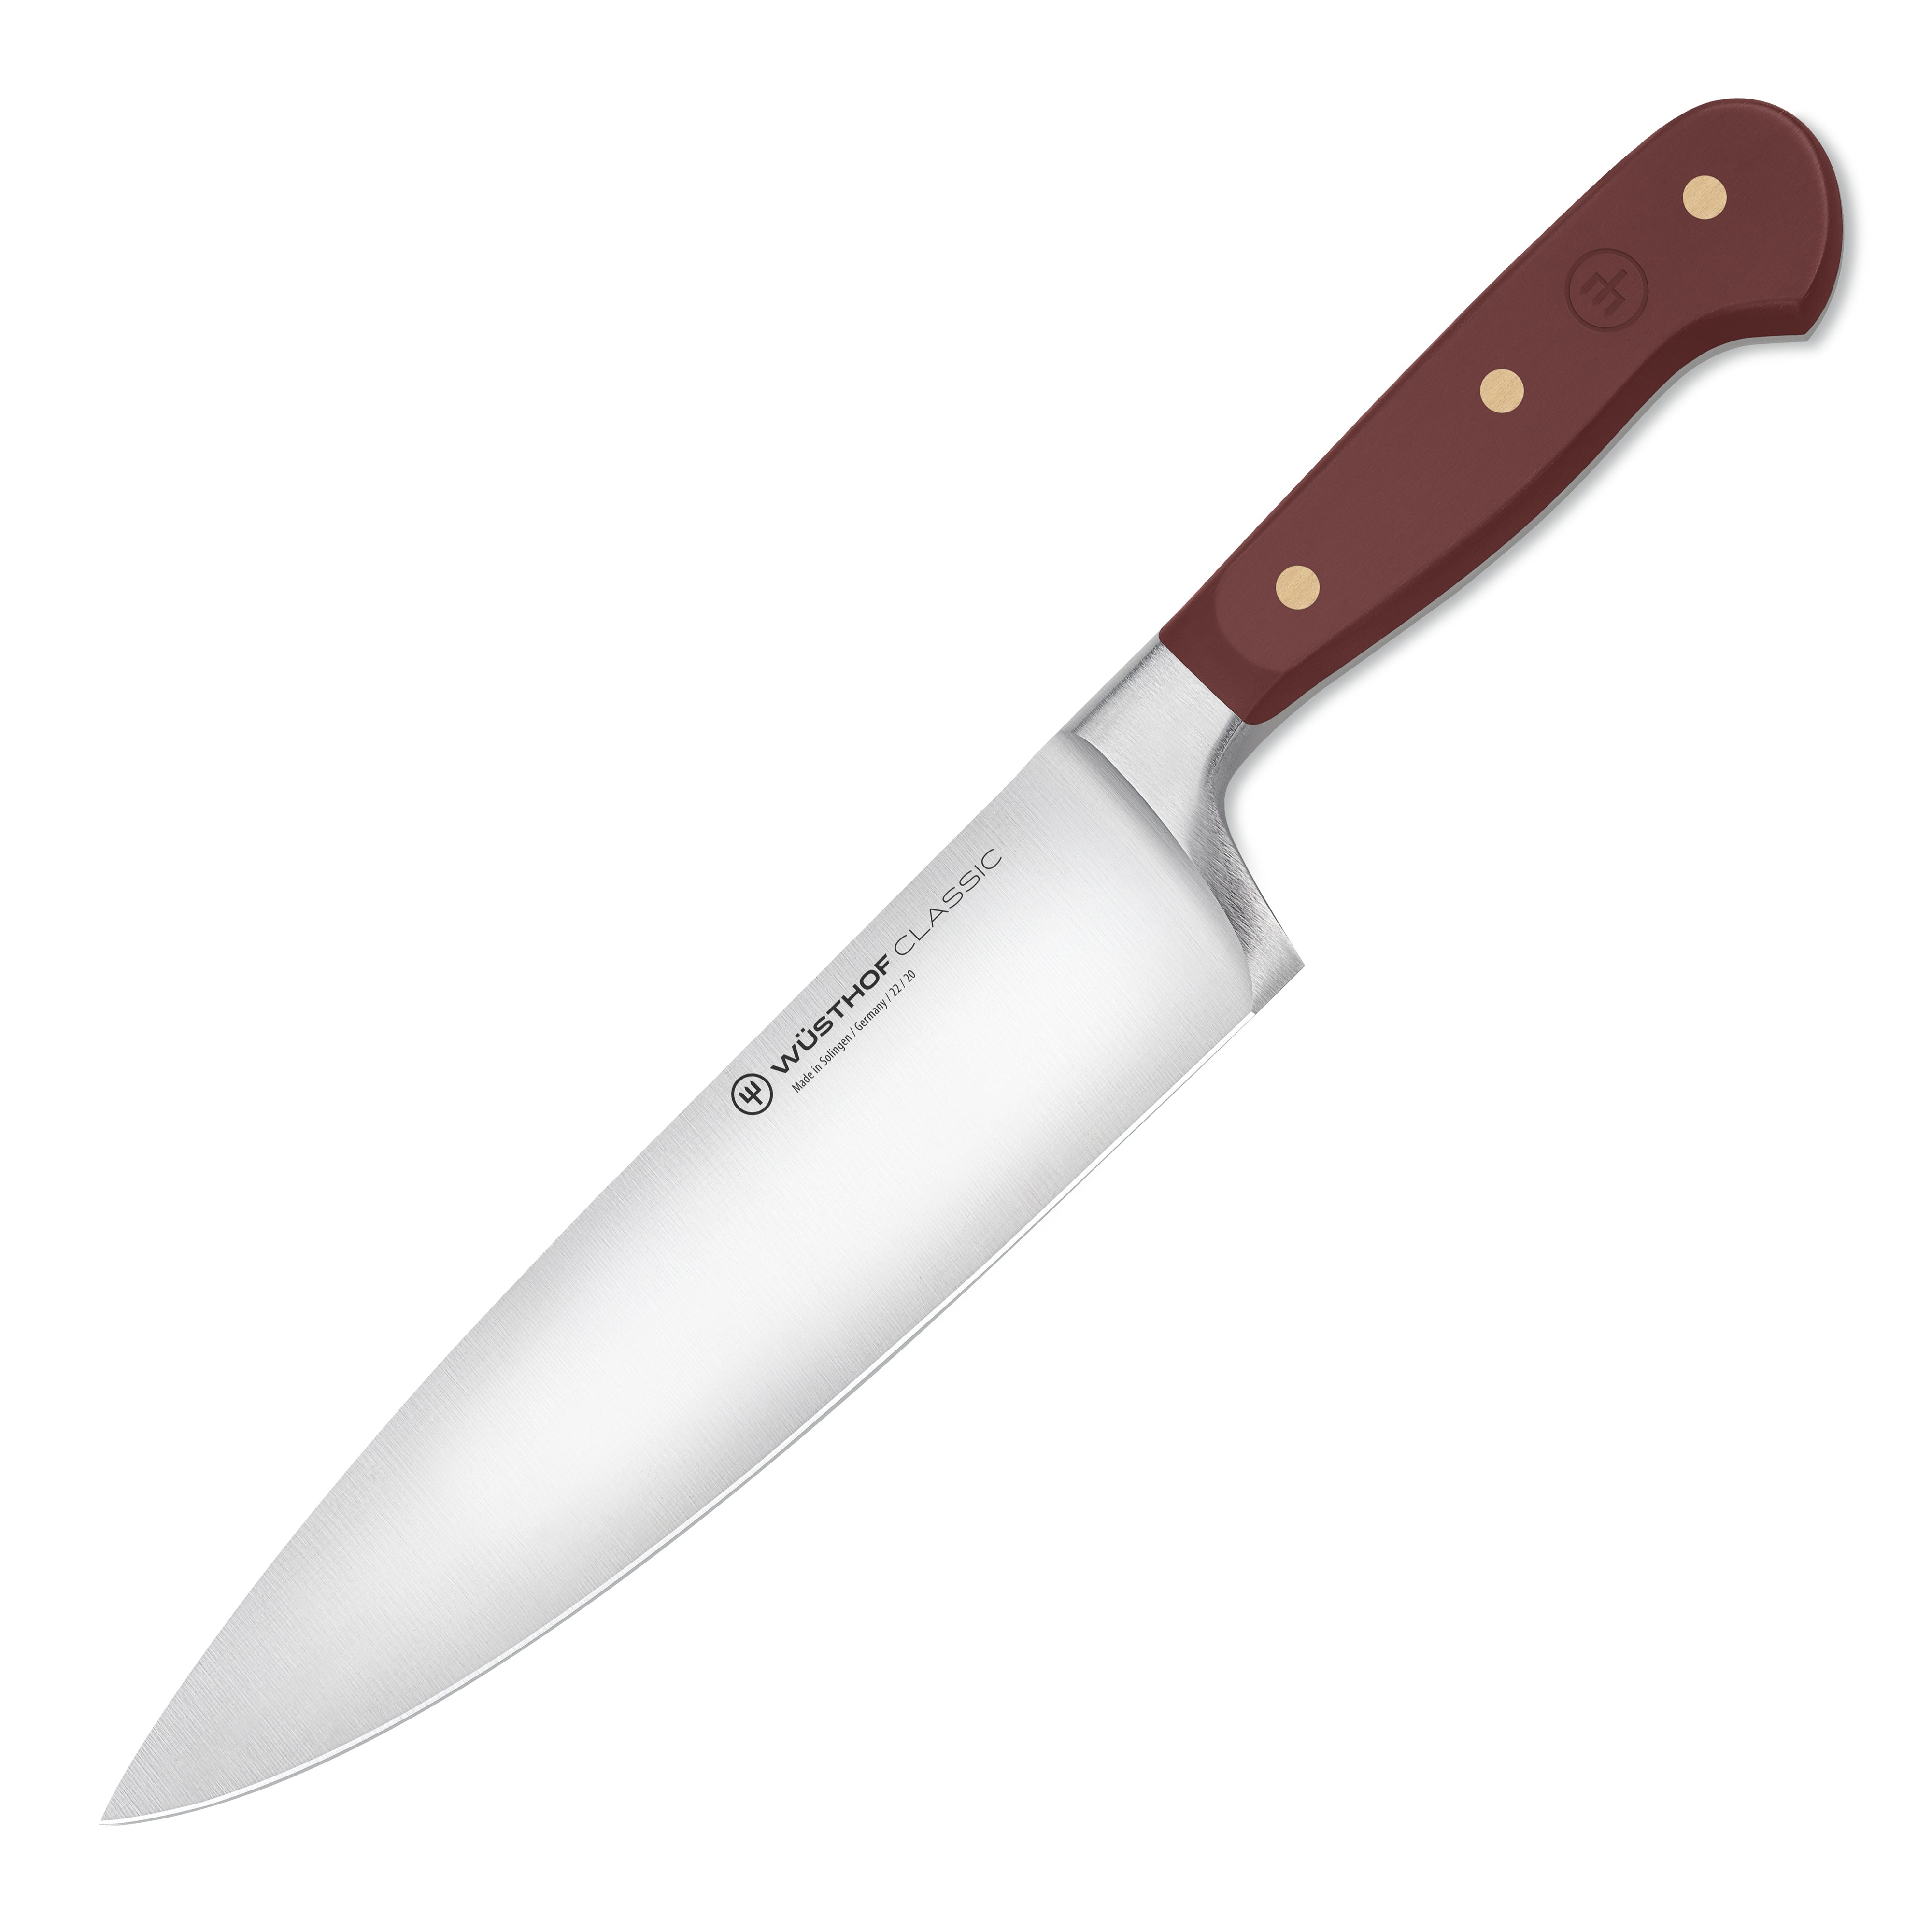 Knives in block CLASSIC COLOUR, set of 8, tasty sumac, Wüsthof